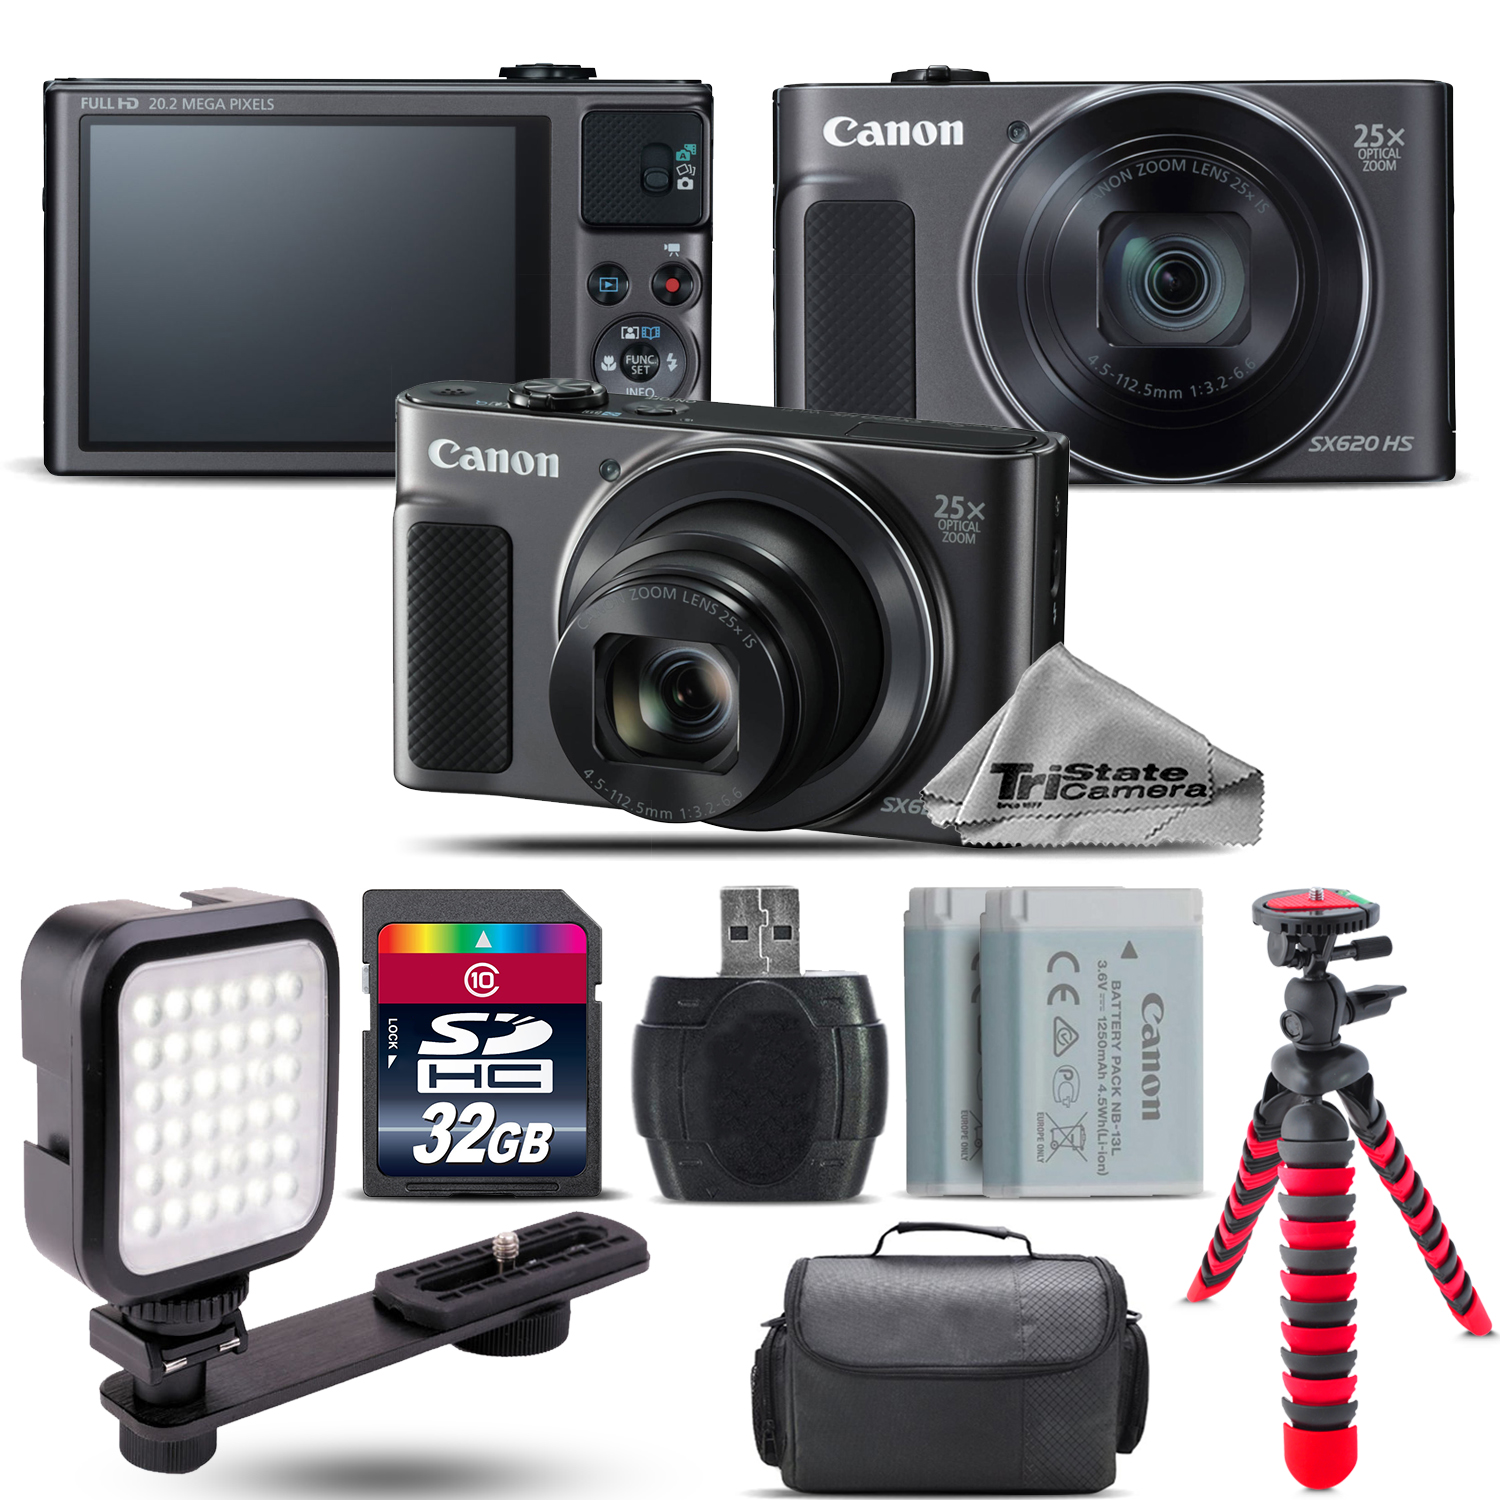 PowerShot SX620 HS Camera (Black) + Case + Spider Tripod + LED - 32GB Kit *FREE SHIPPING*